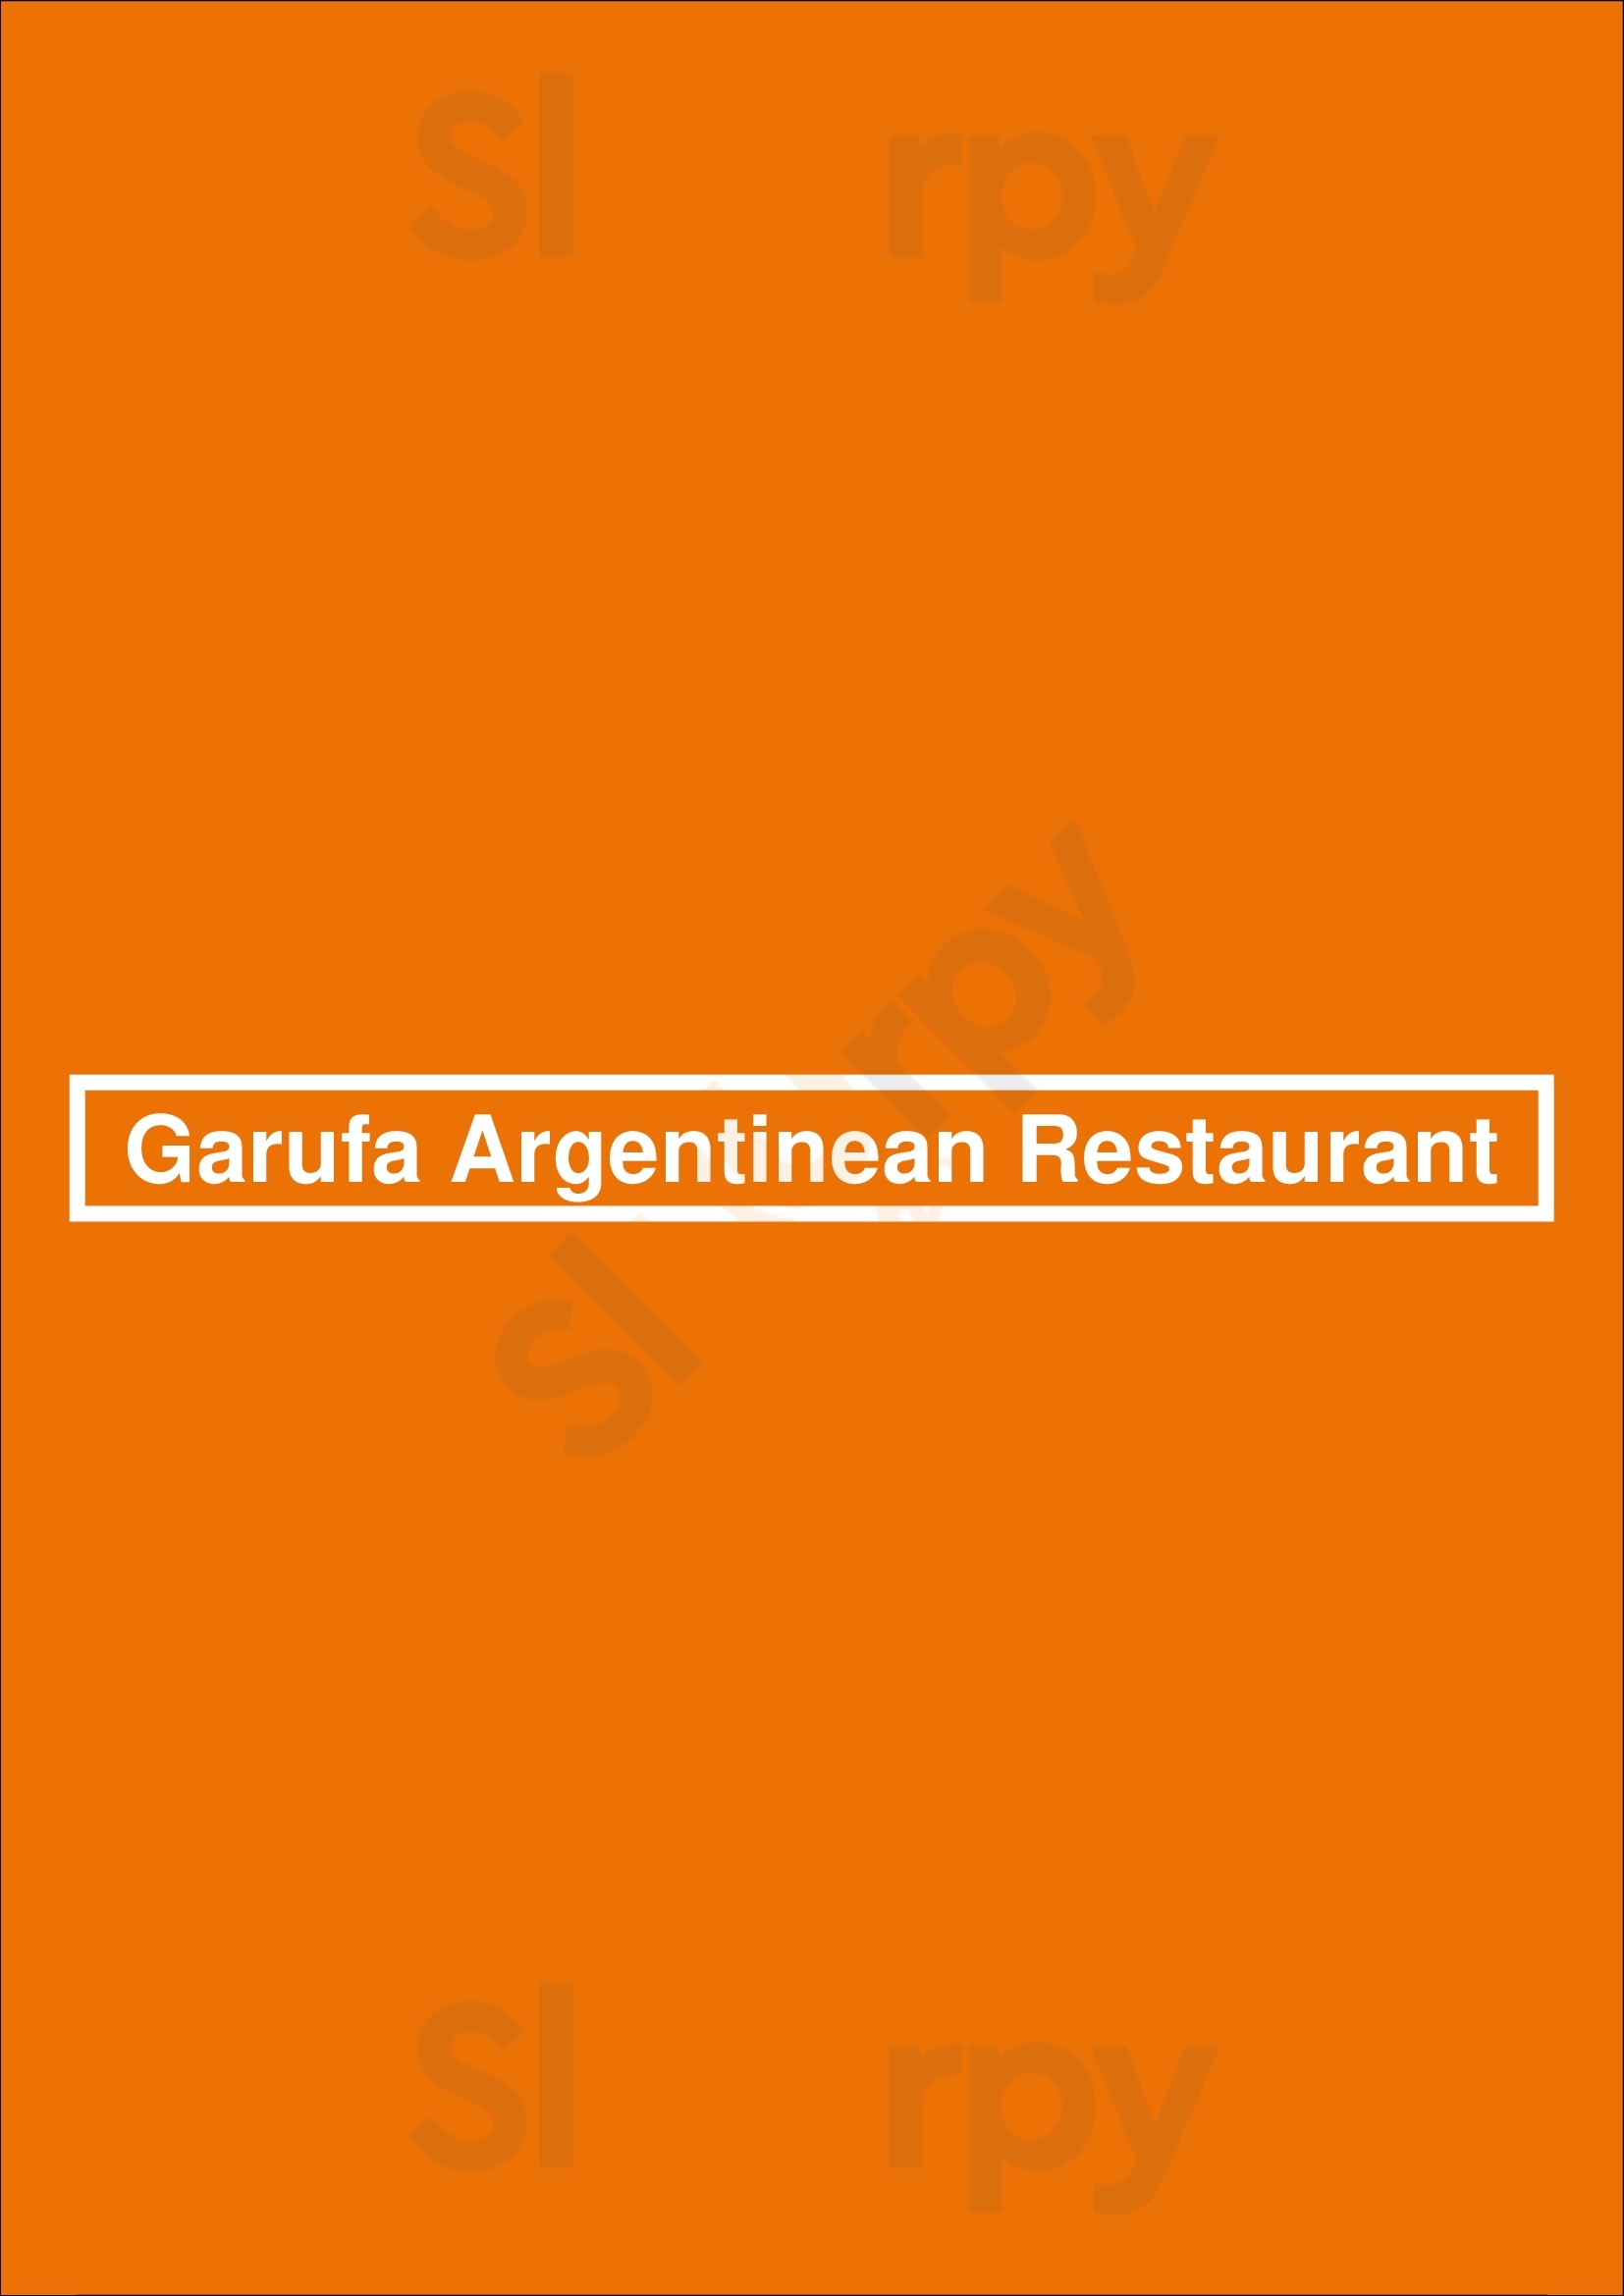 Garufa Argentinean Restaurant El Paso Menu - 1